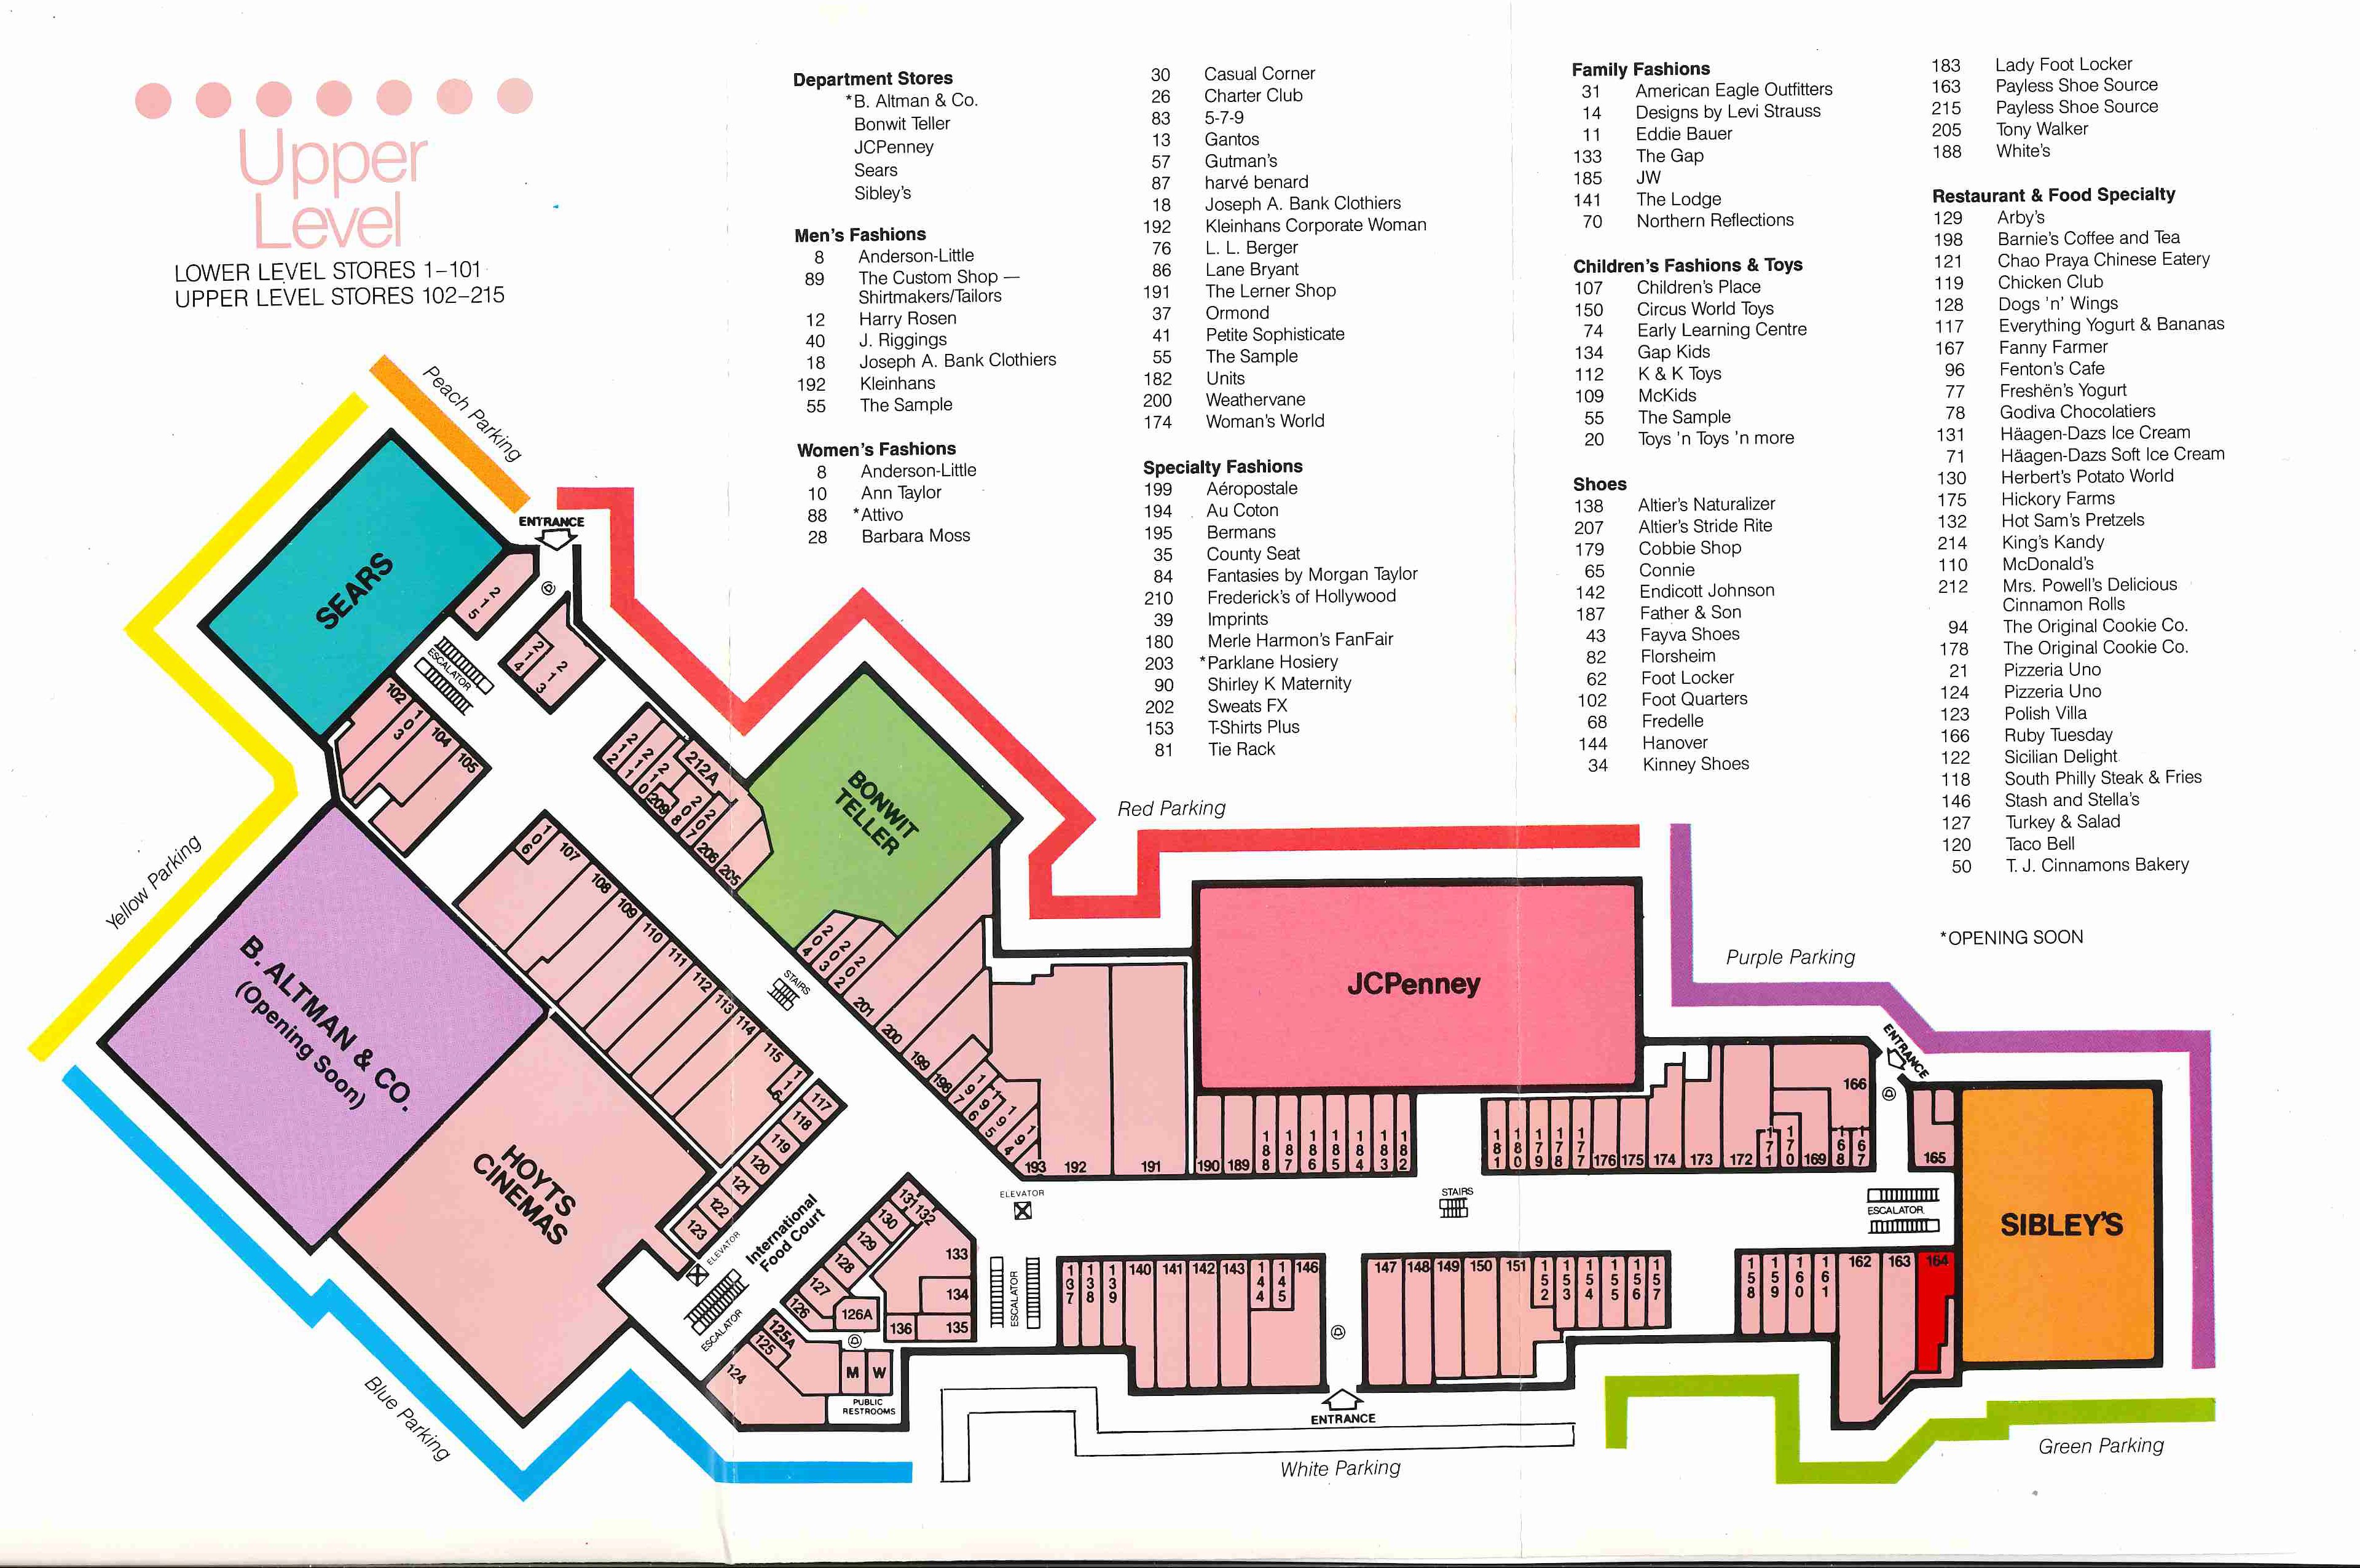 galleria mall map